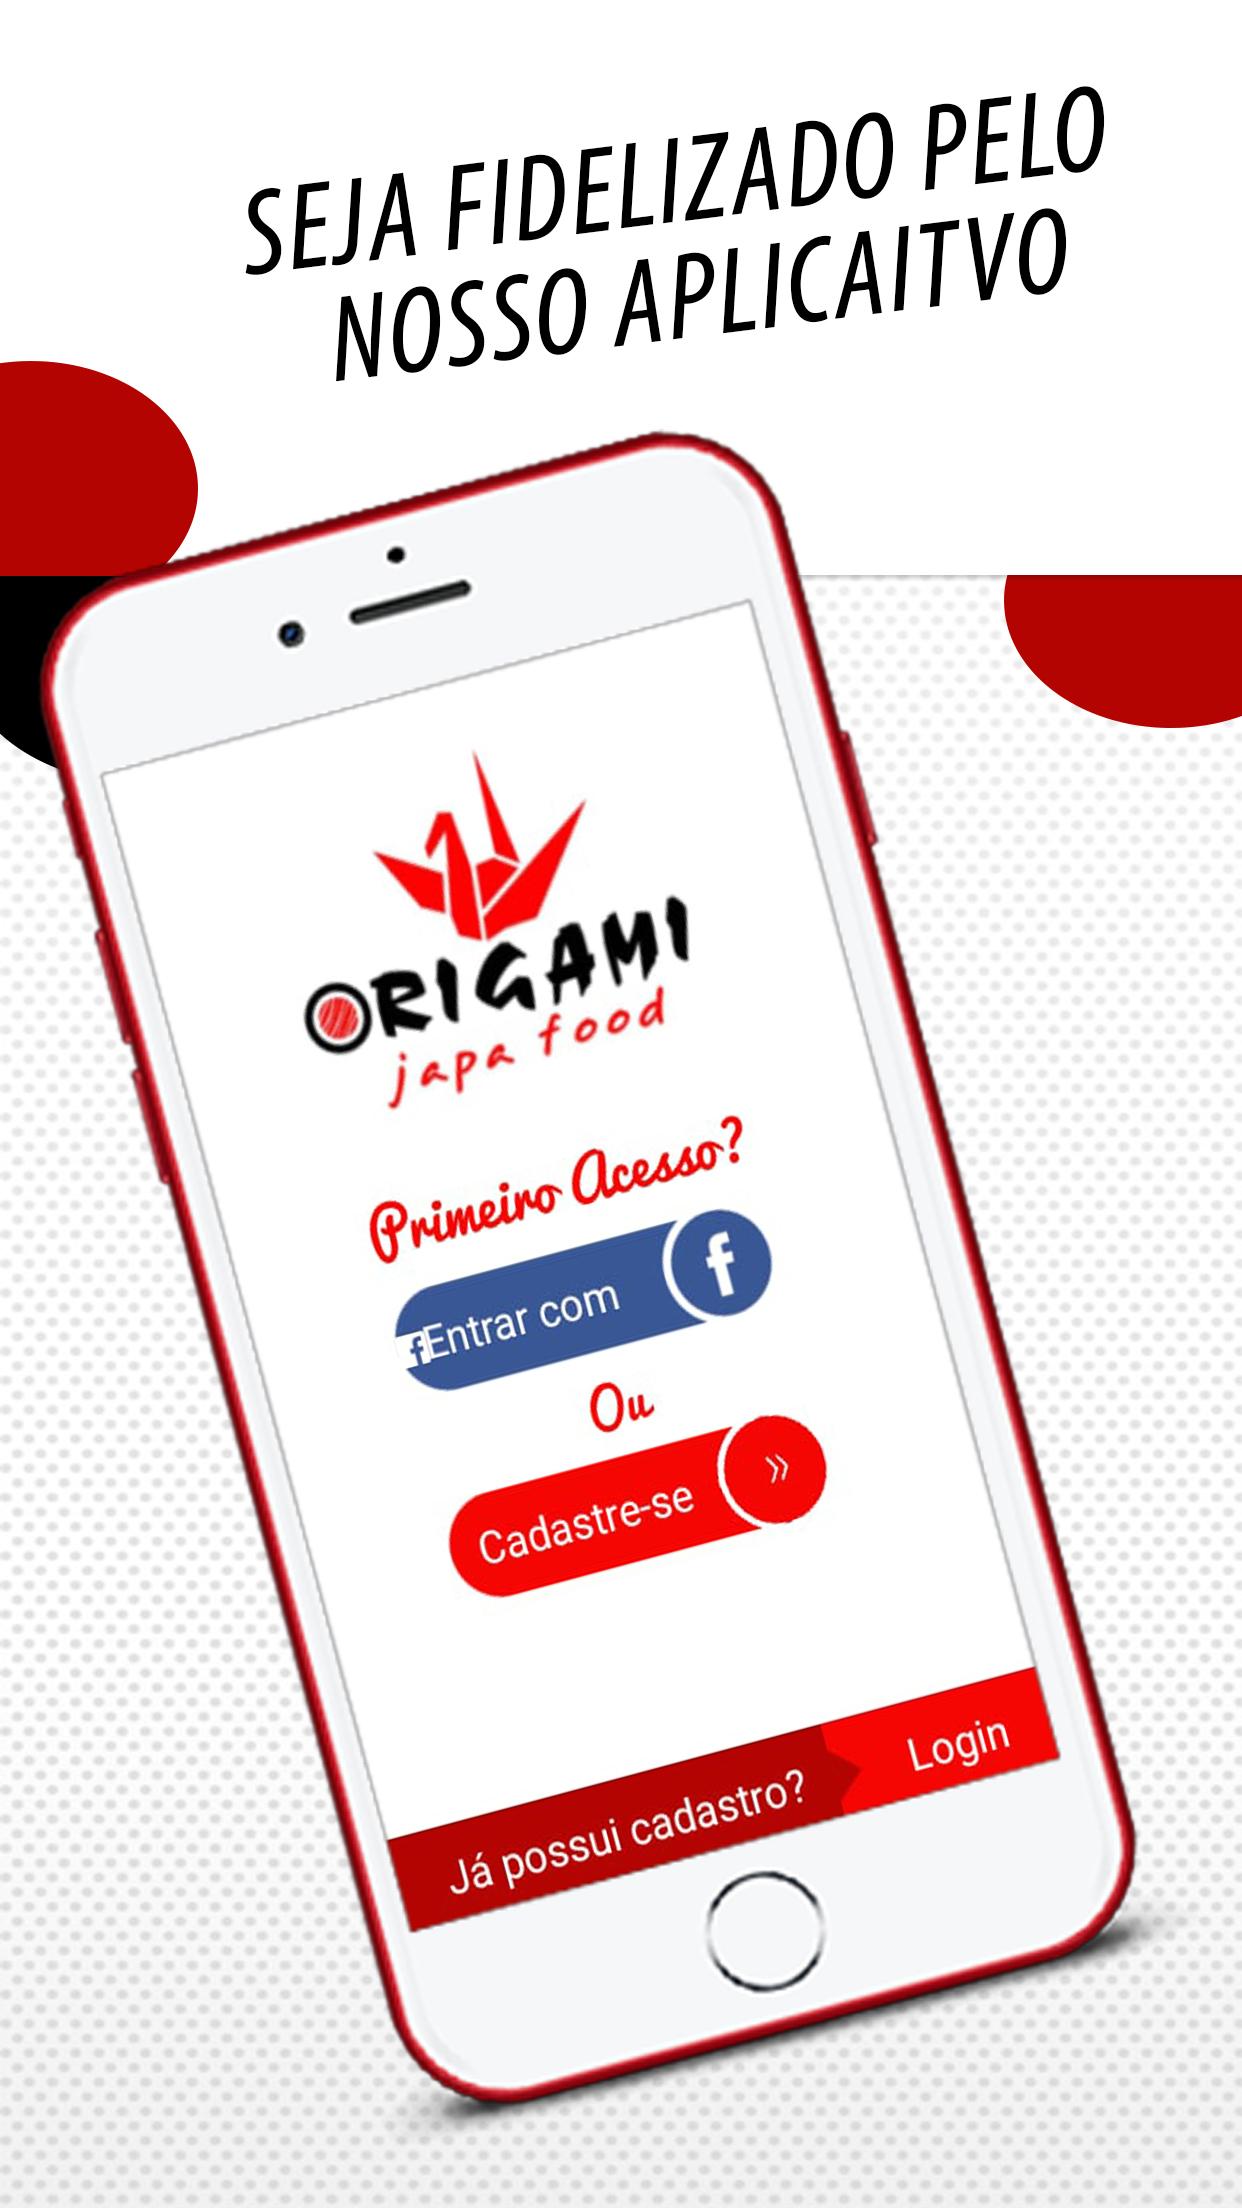 Android application Origami Japa Food screenshort